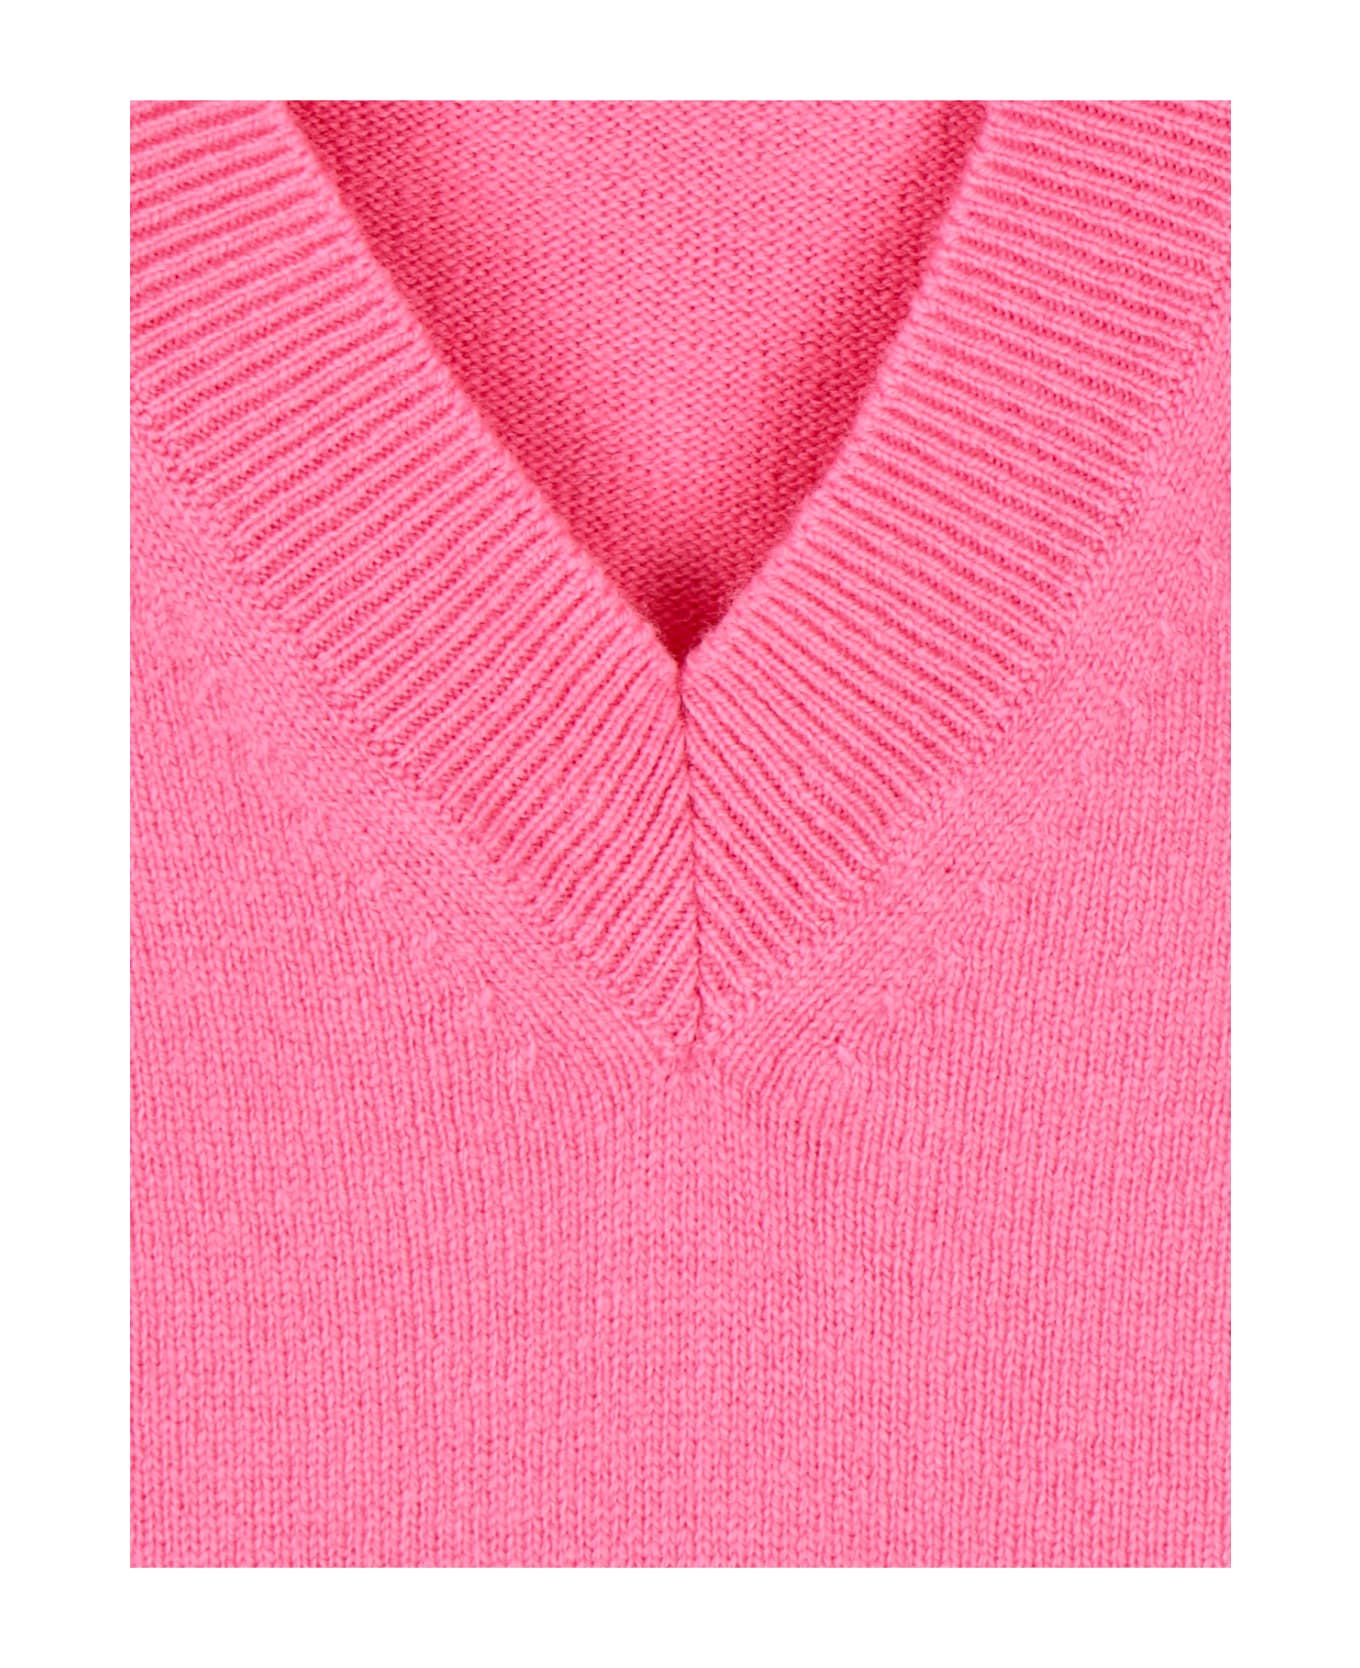 Comme des Garçons Wool Sweater - Pink ニットウェア